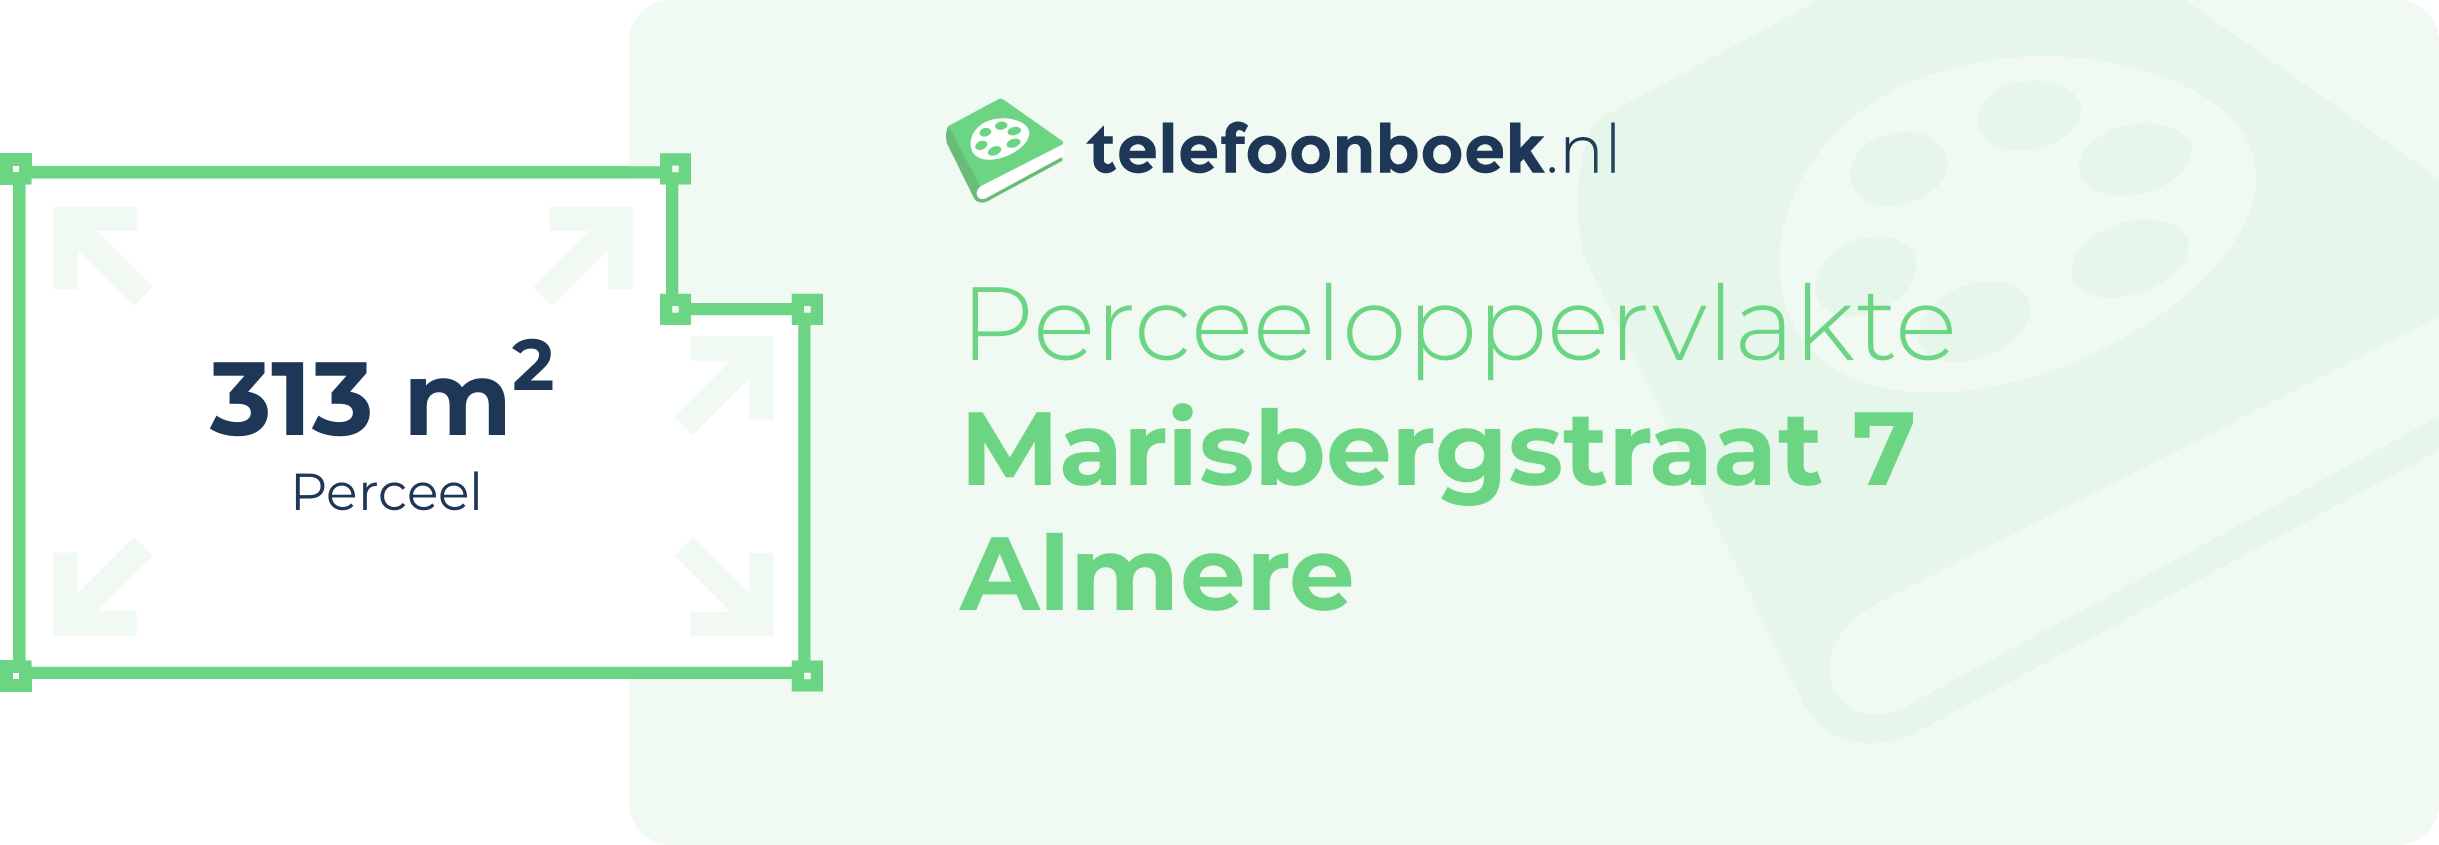 Perceeloppervlakte Marisbergstraat 7 Almere